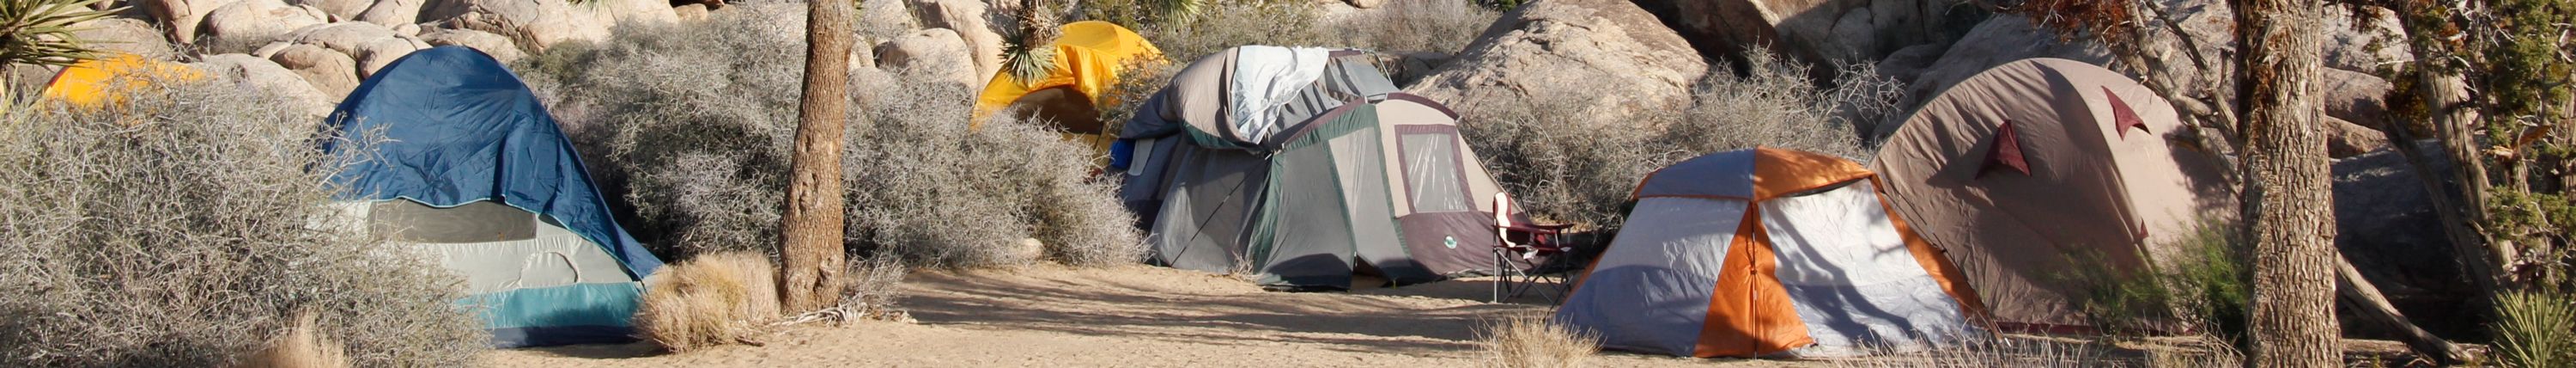 camping-supplies-banner